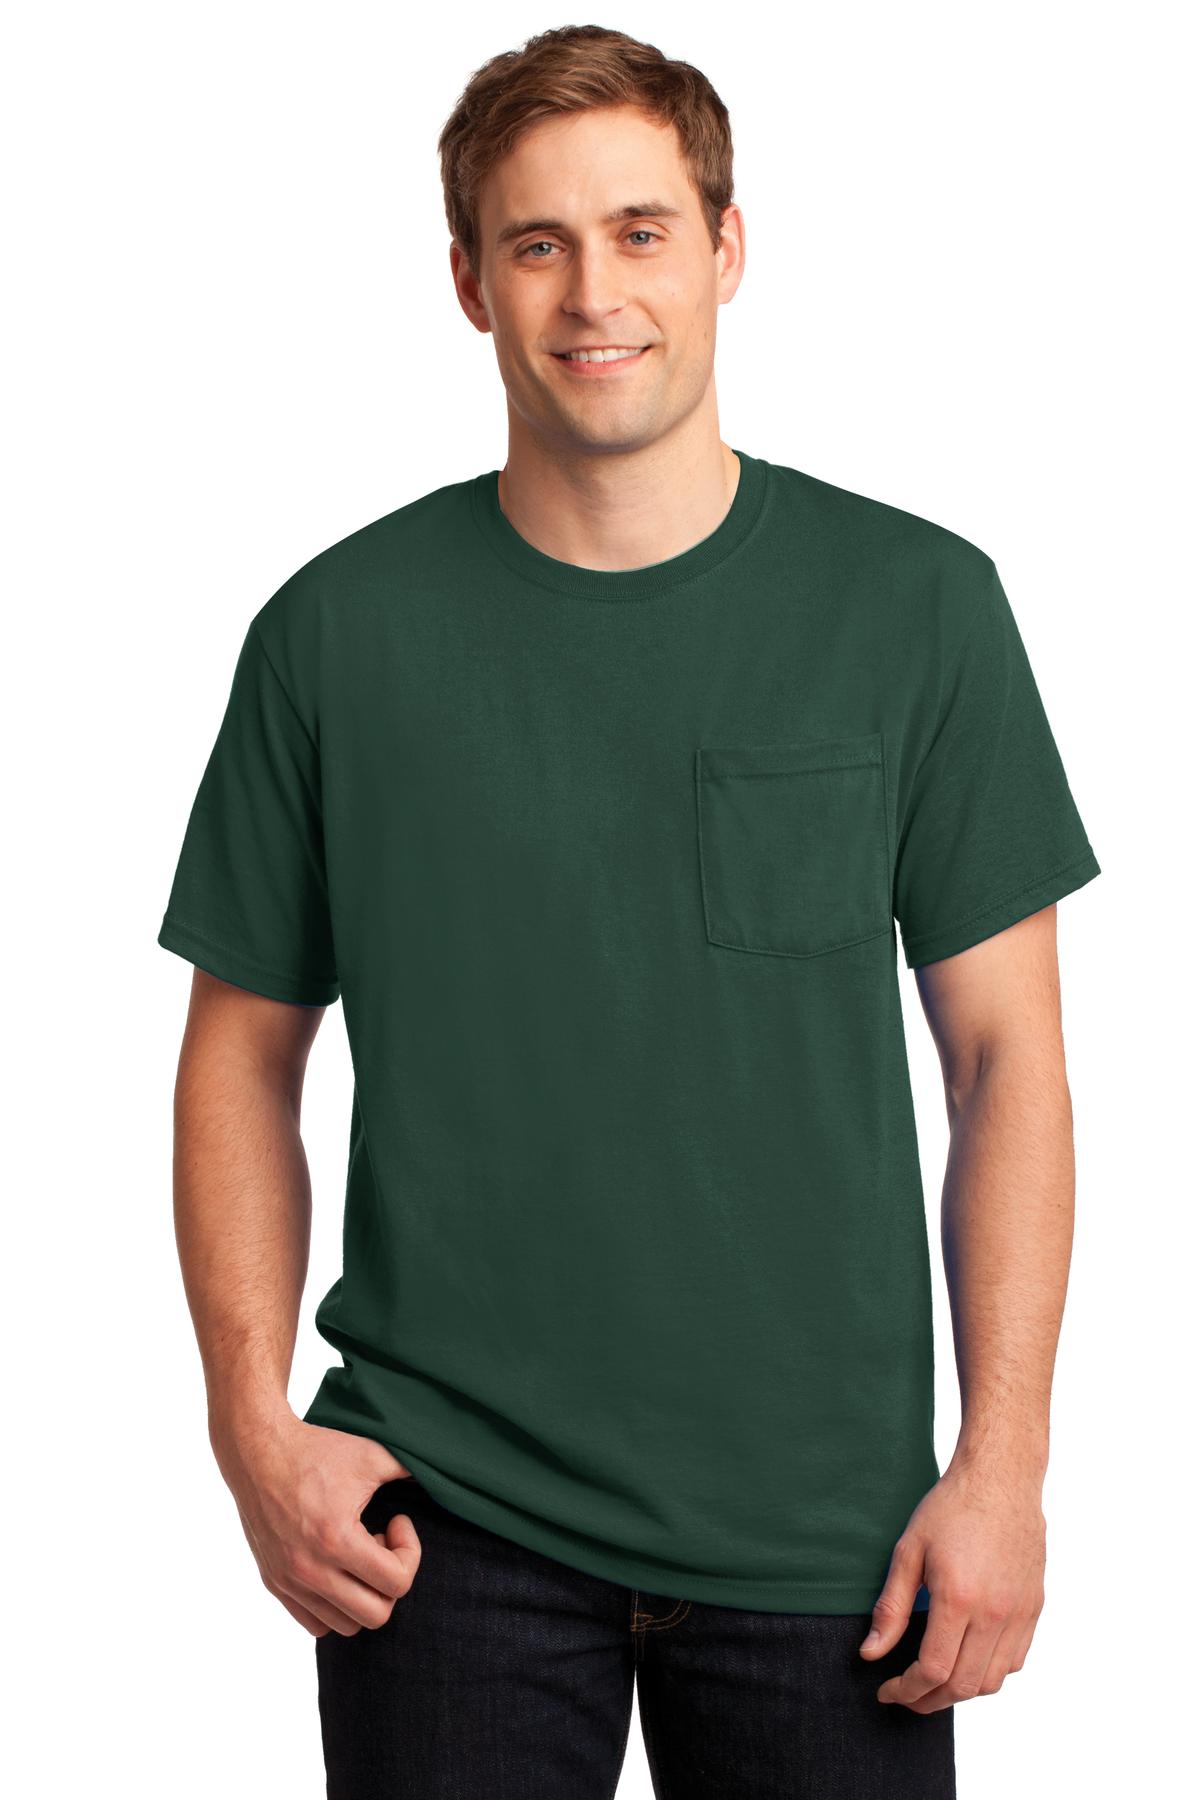 JERZEES® - Dri-Power® 50/50 Cotton/Poly Pocket T-Shirt. 29MP [Forest Green] - DFW Impression